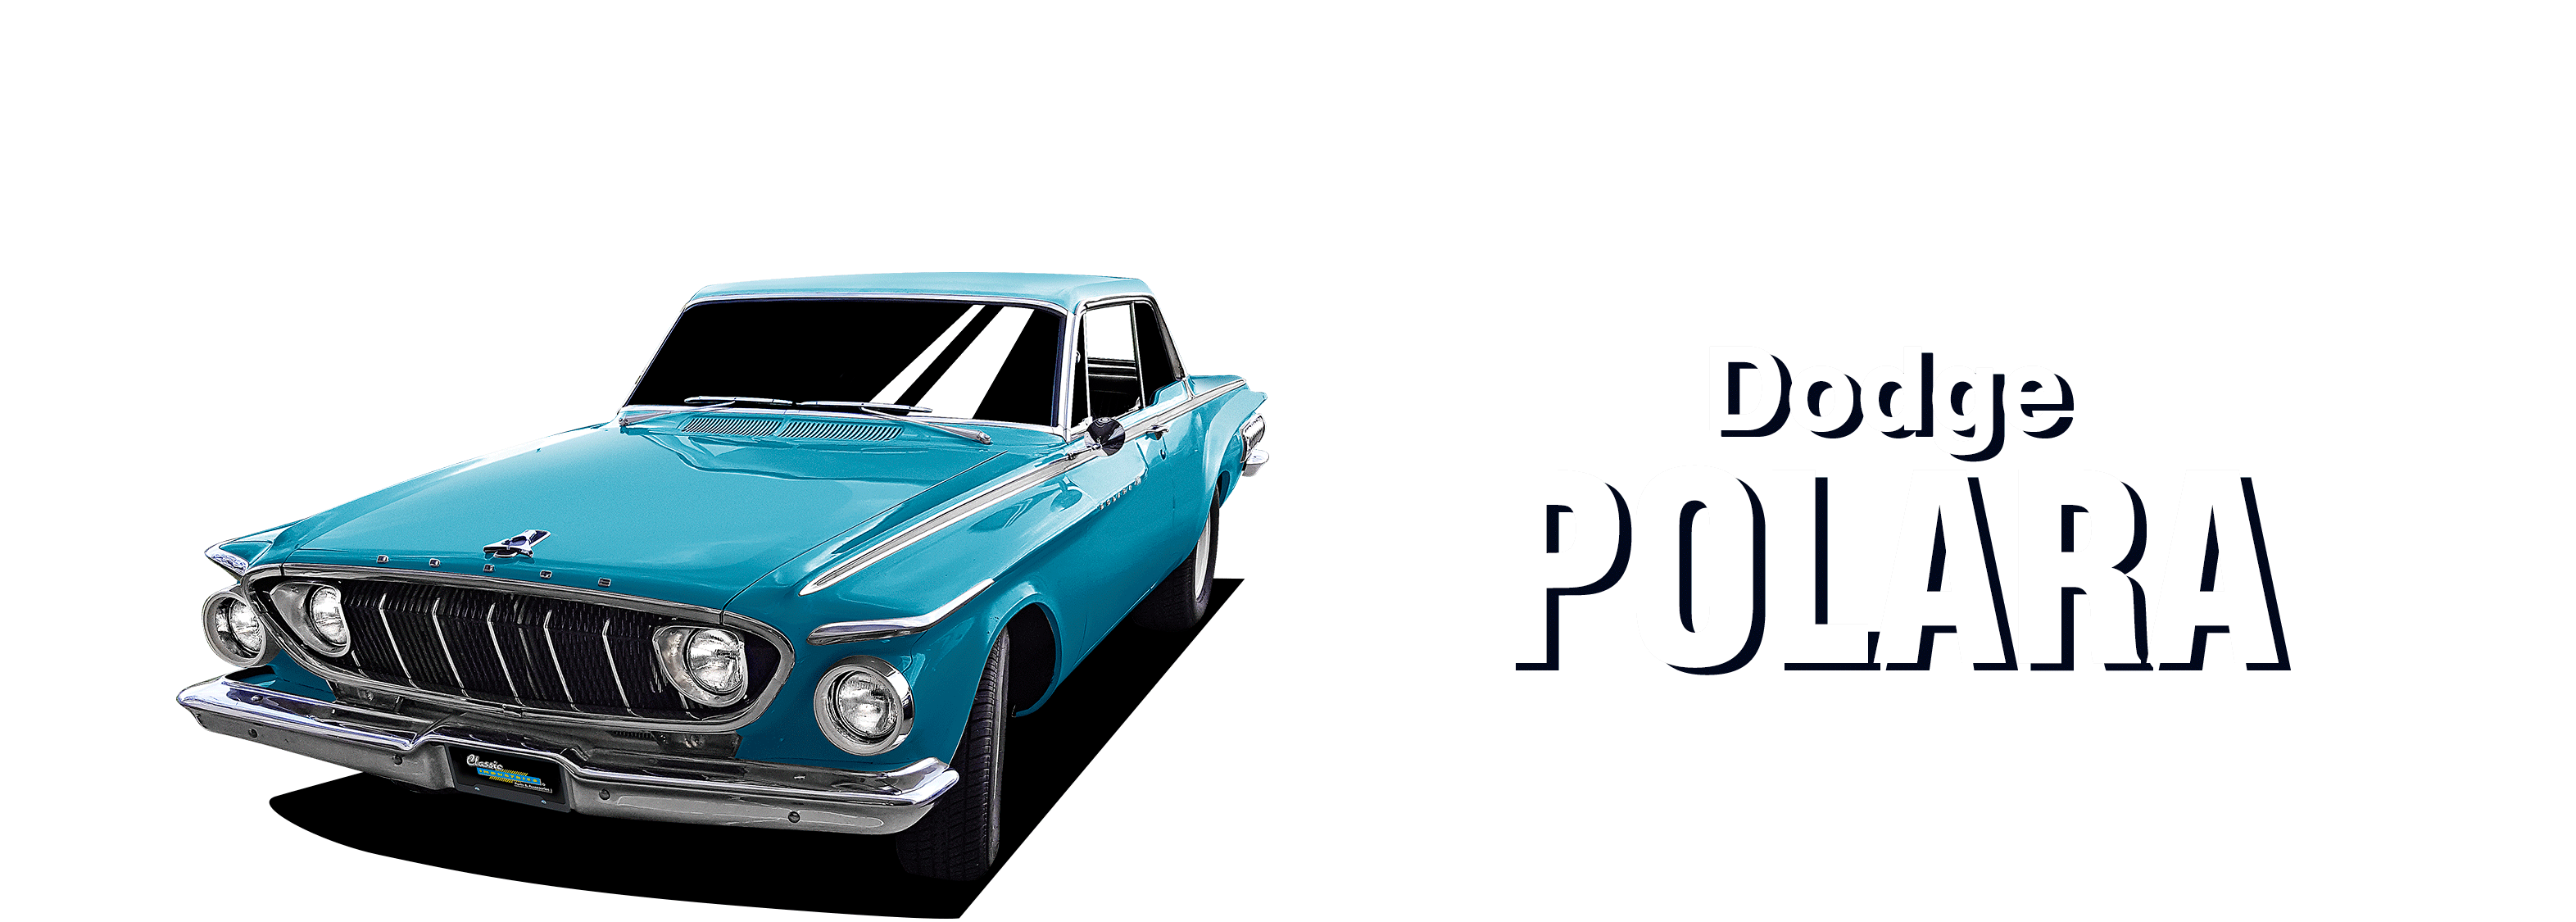 Dodge-Polara-vehicle-desktop-2023